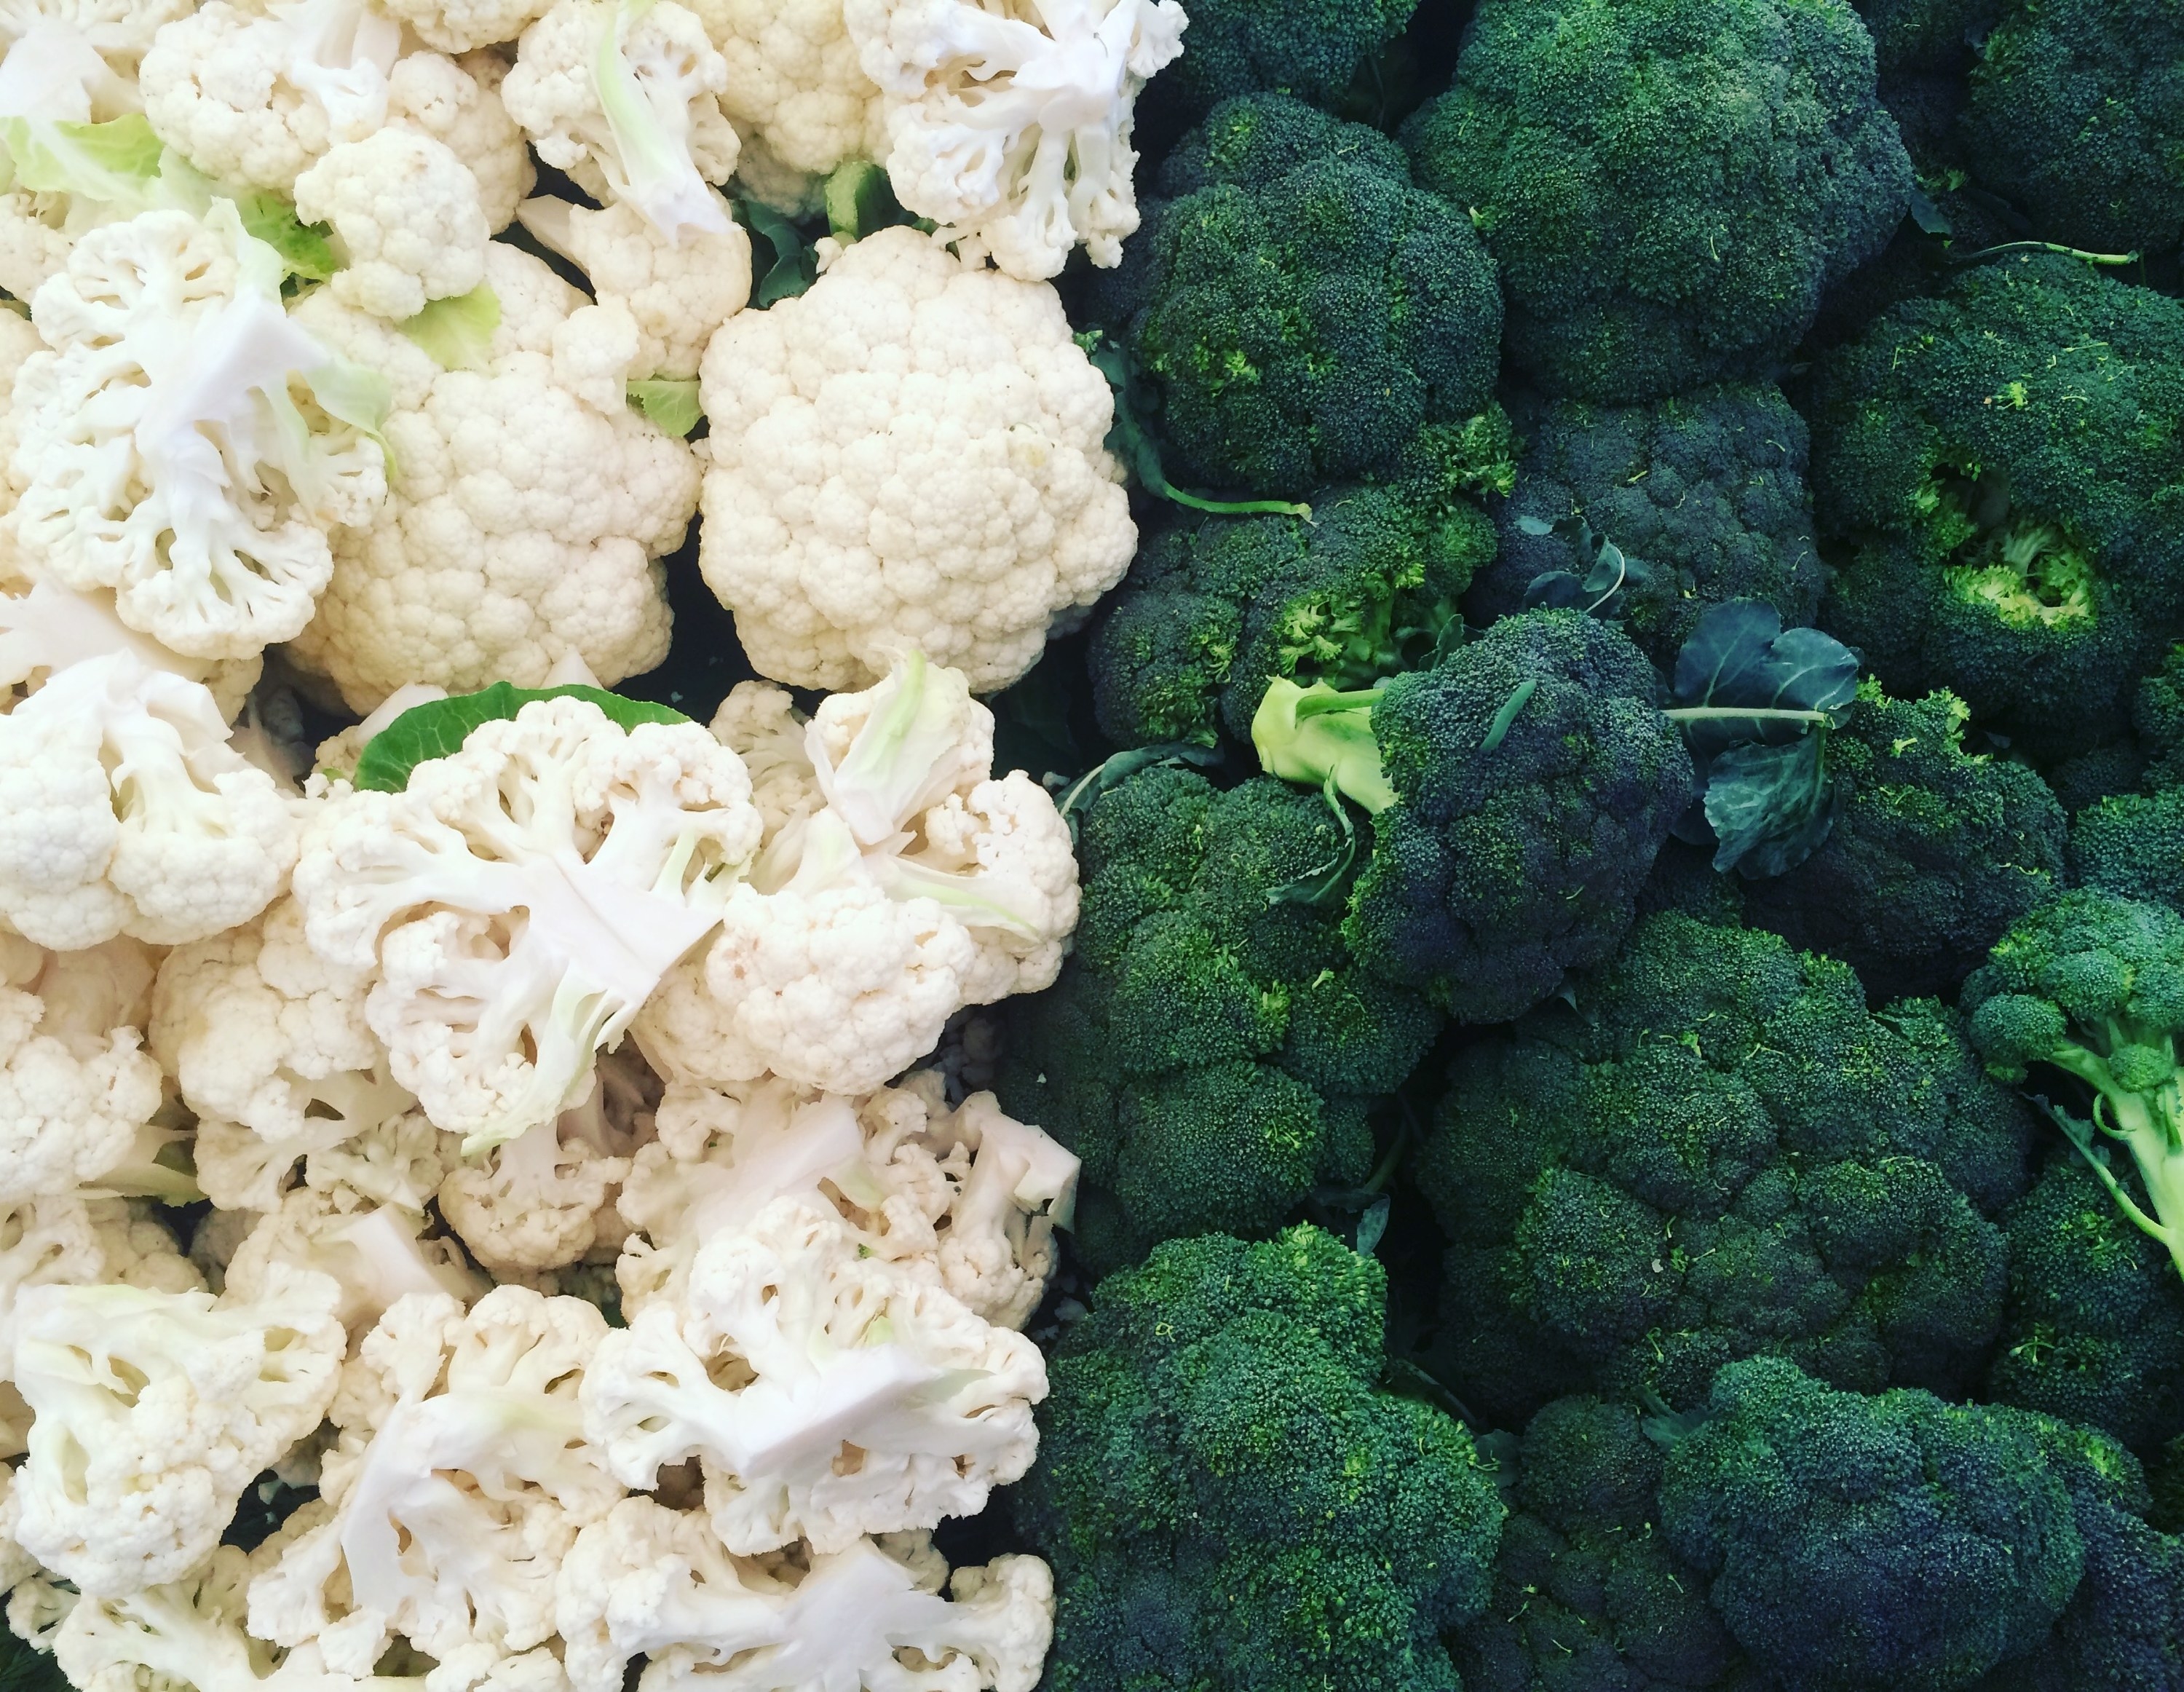 Cauliflower and broccoli